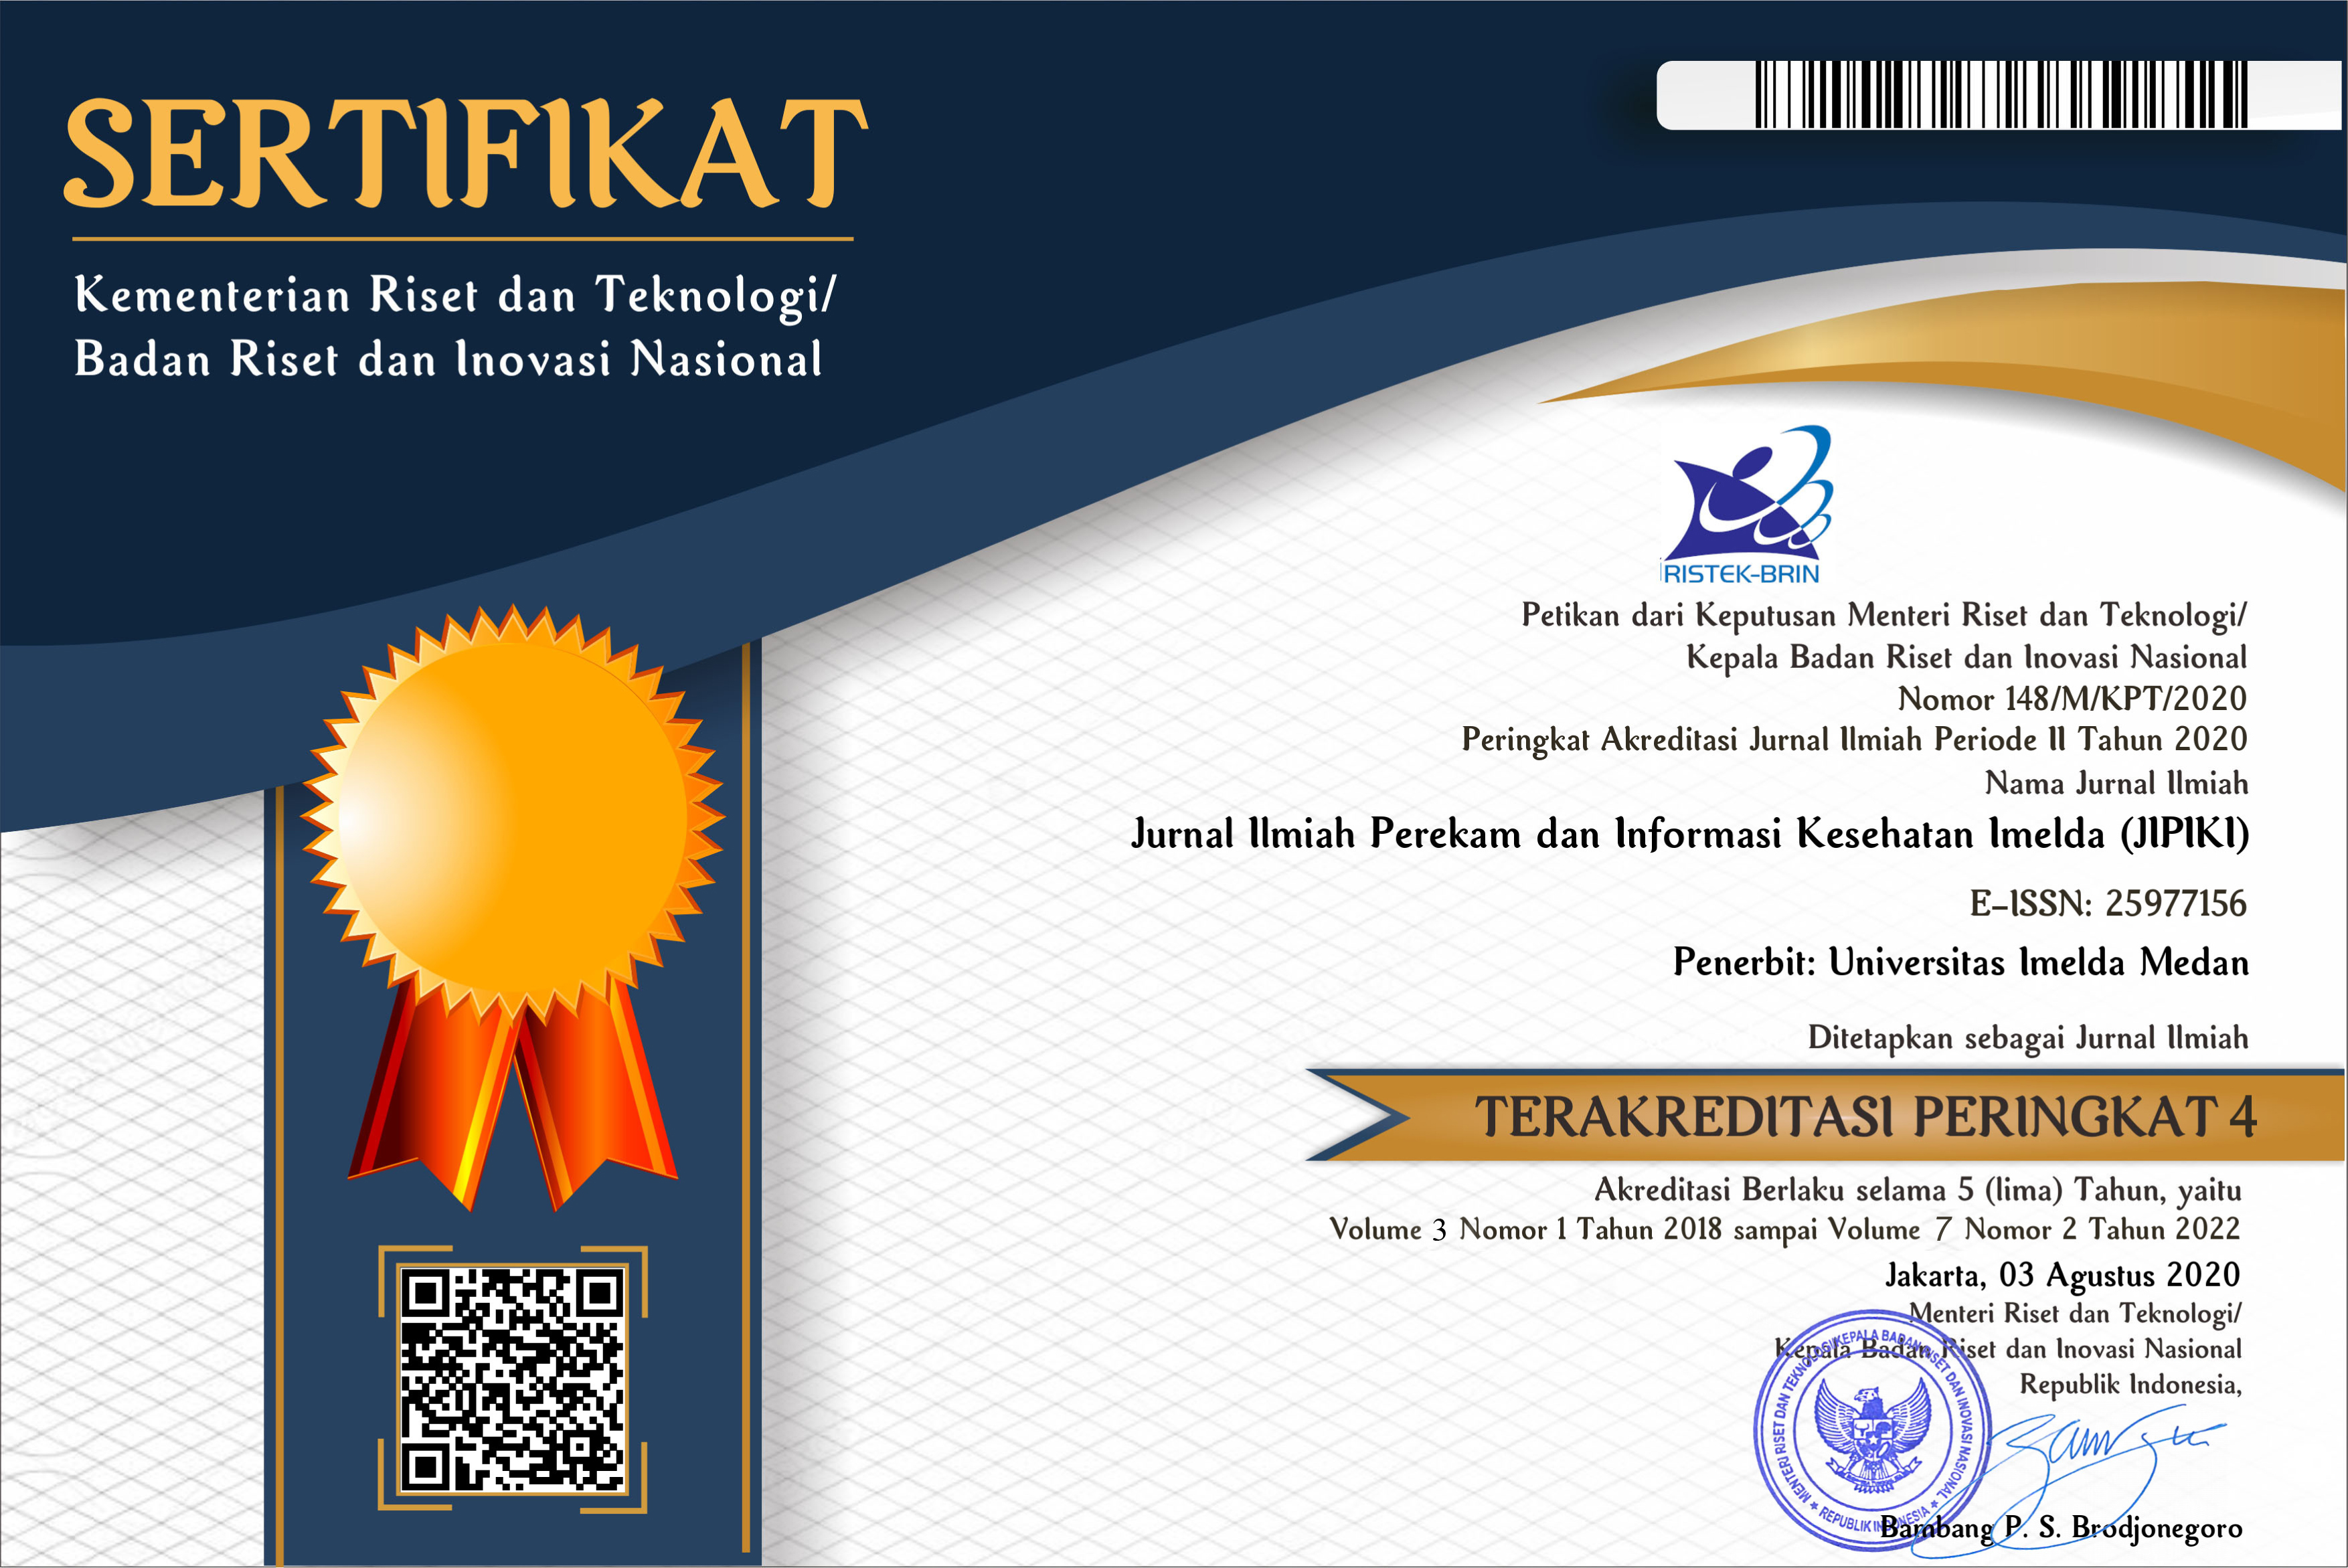 sertifikat_akreditasi_JIPIKI_fix.jpg